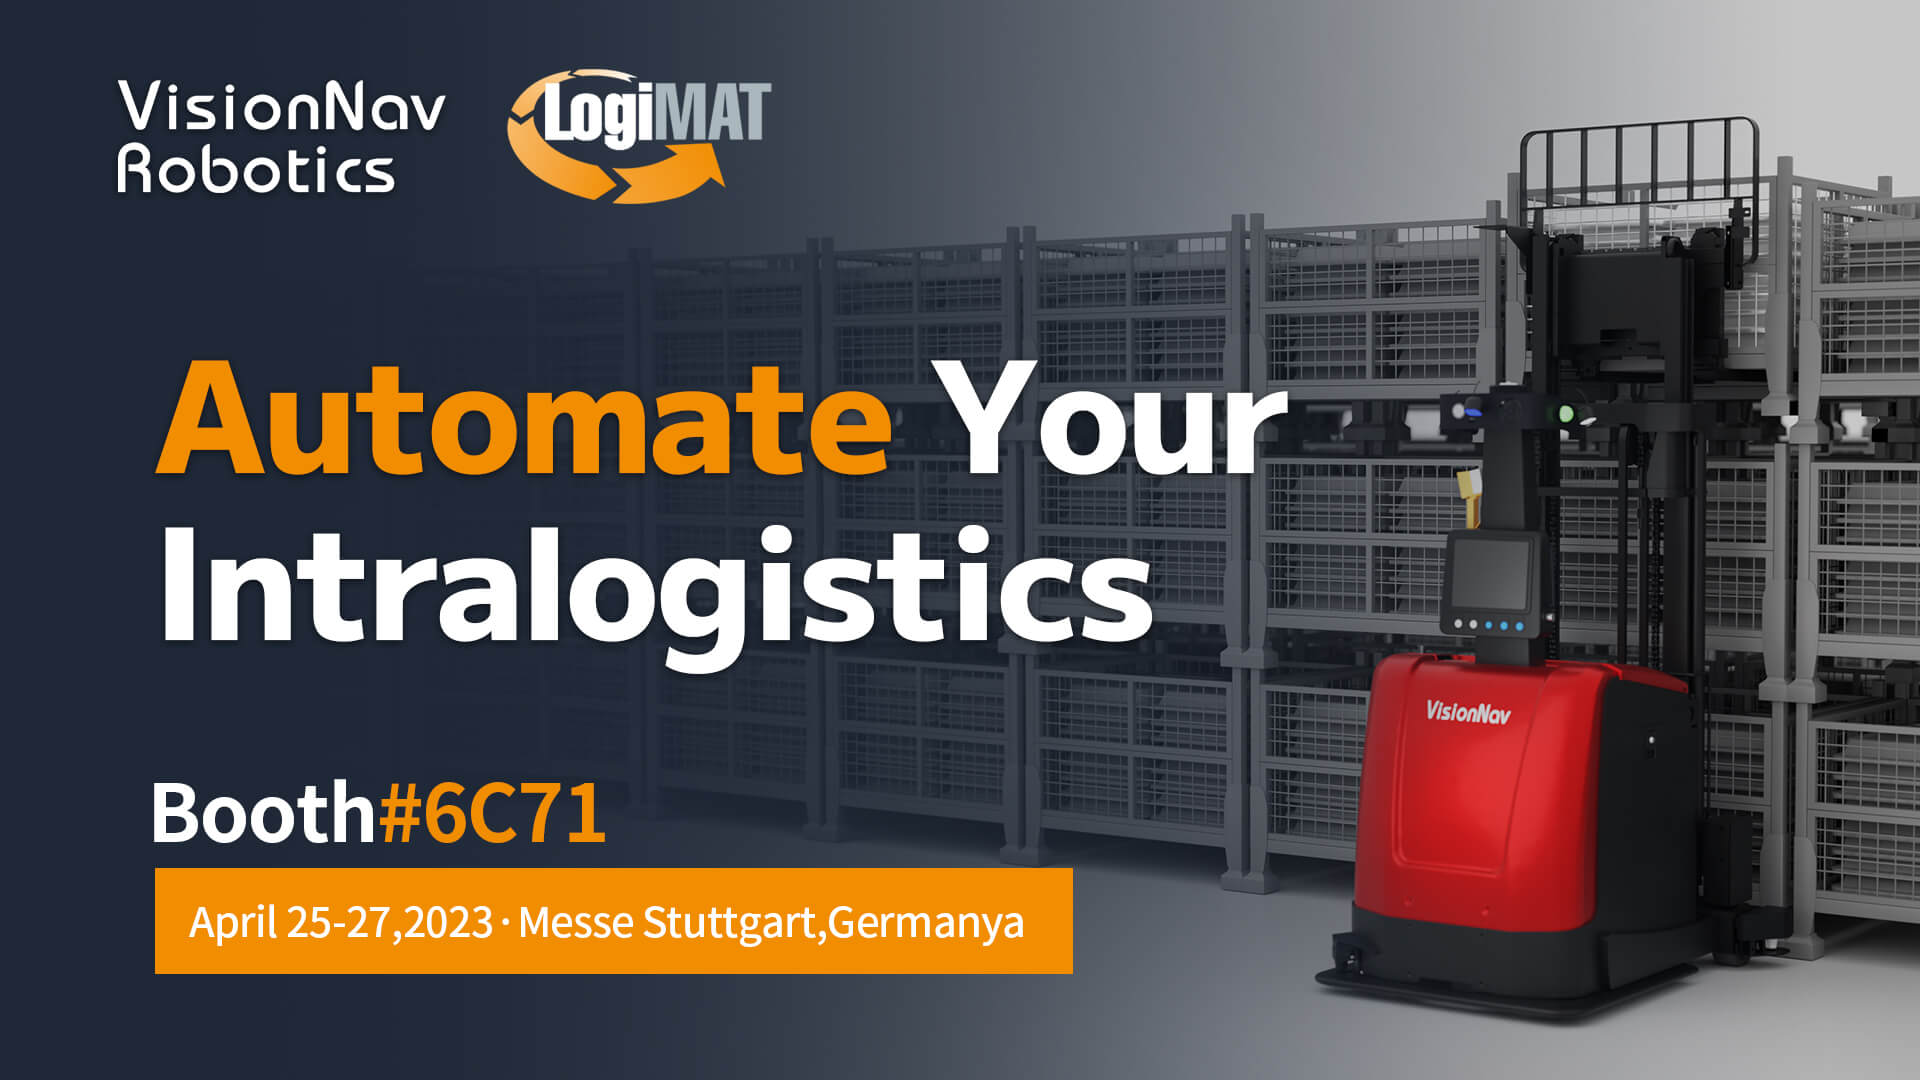 VisionNav Robotics Brings Full-stack Logistics Solution to LogiMAT2023!